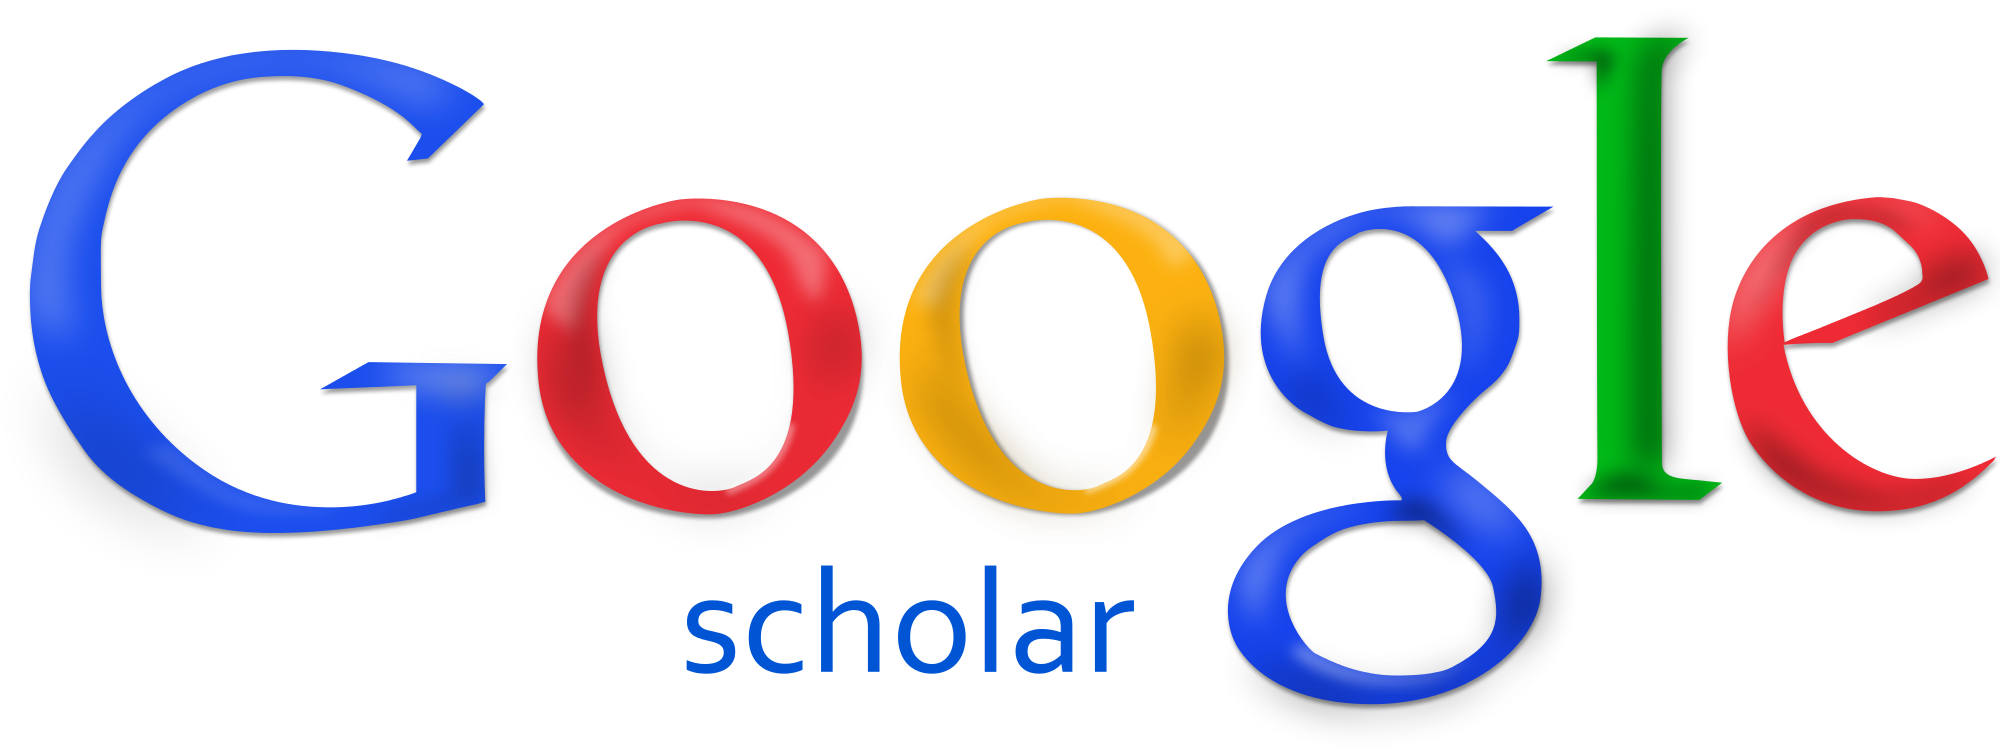 Google-Scholar.png